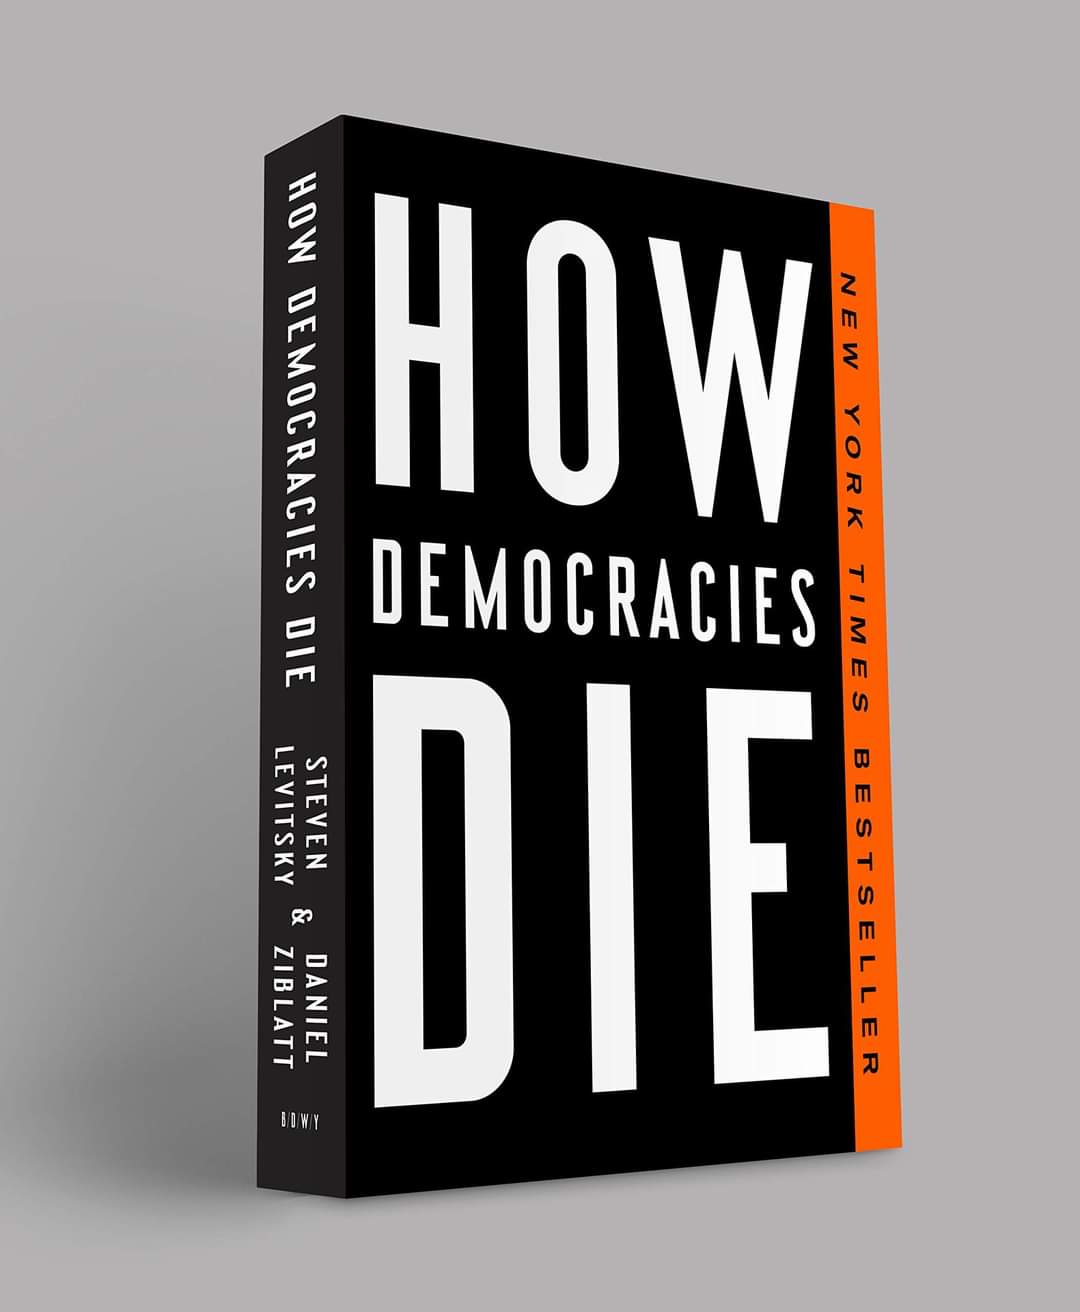 Buku How Democracies Die karya Steven Levitsky & Daniel Ziblatt